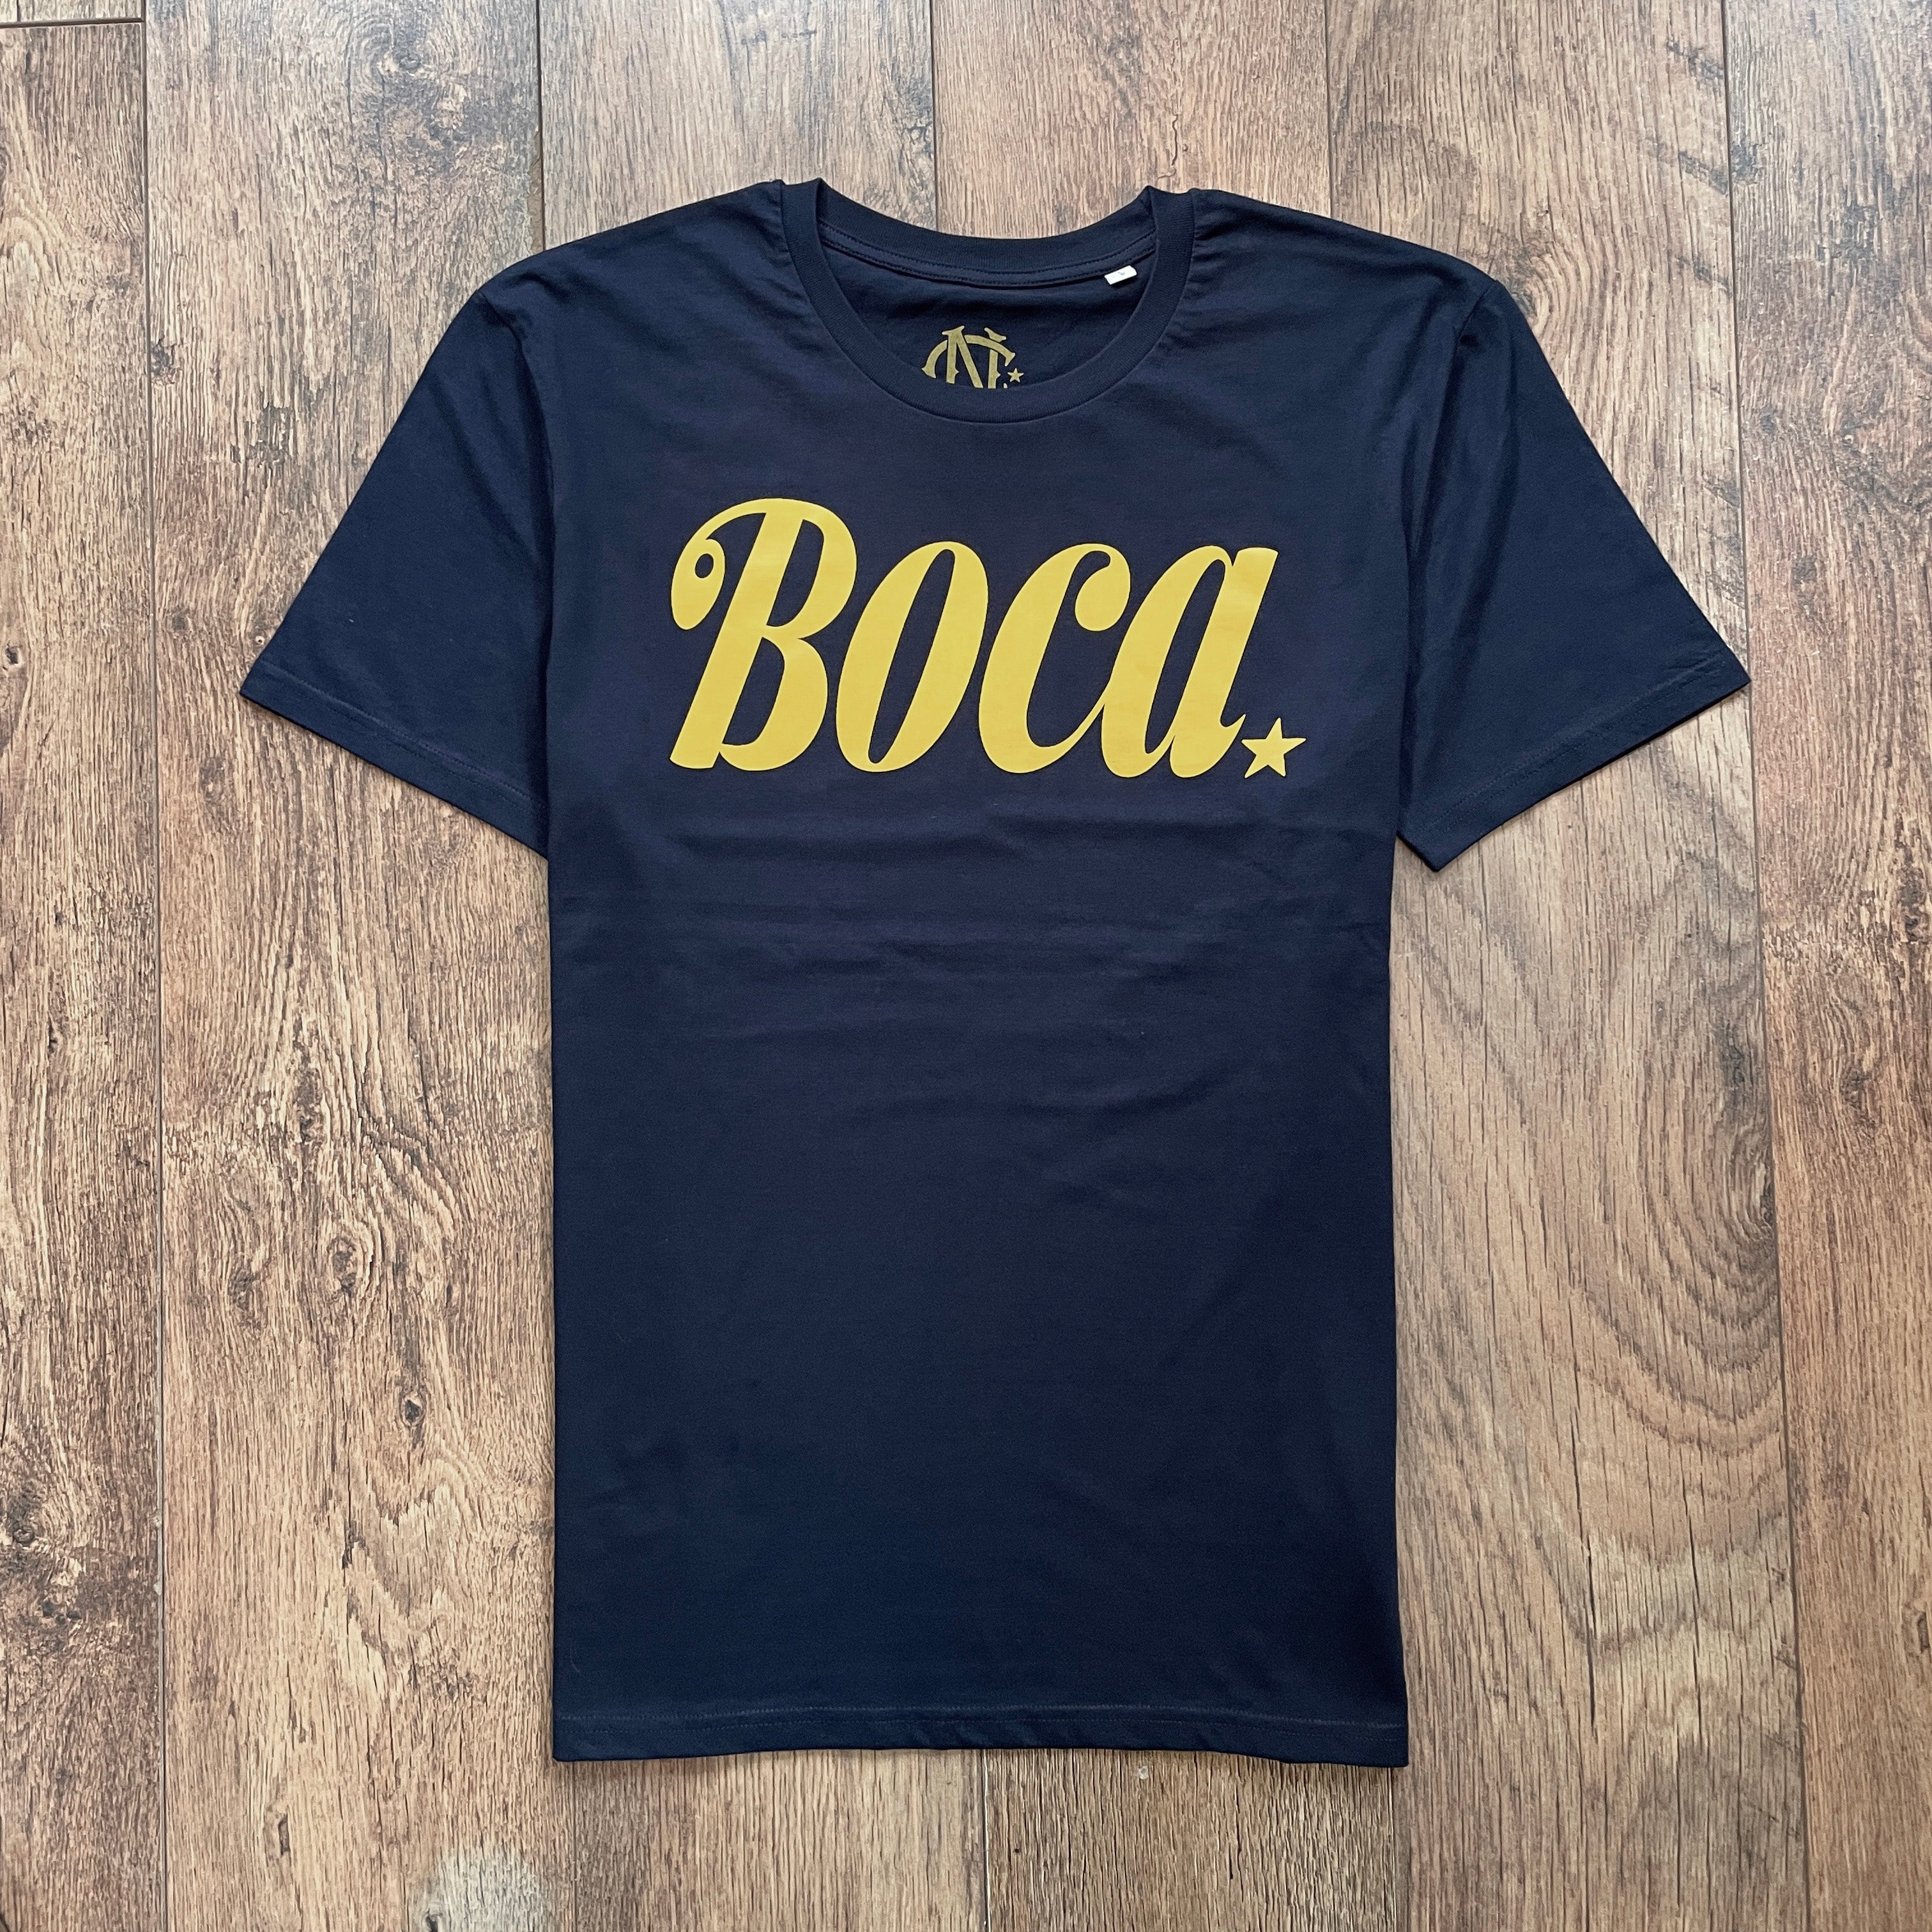 Boca Star T-shirt